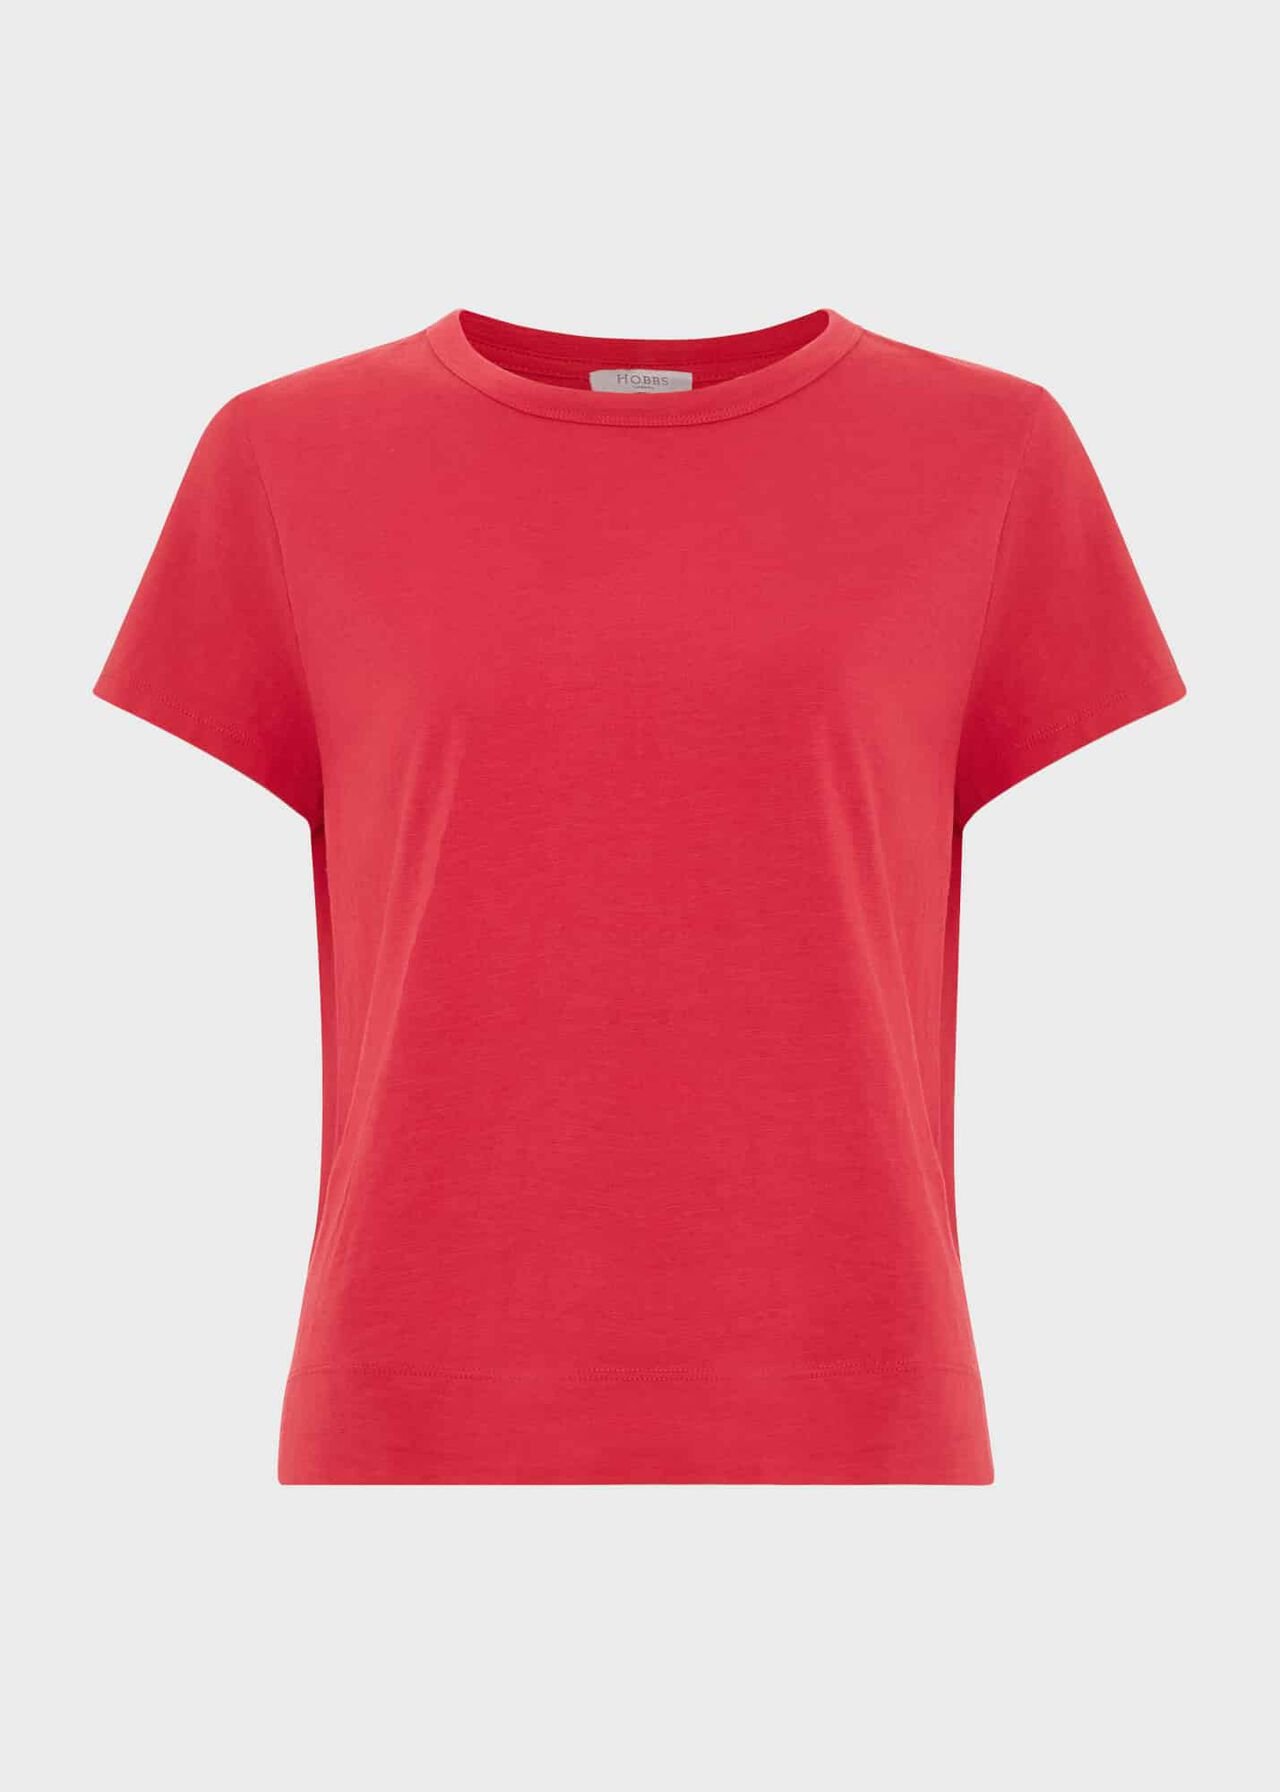 Adaline Cotton Slub T-Shirt, Rouge Pink, hi-res